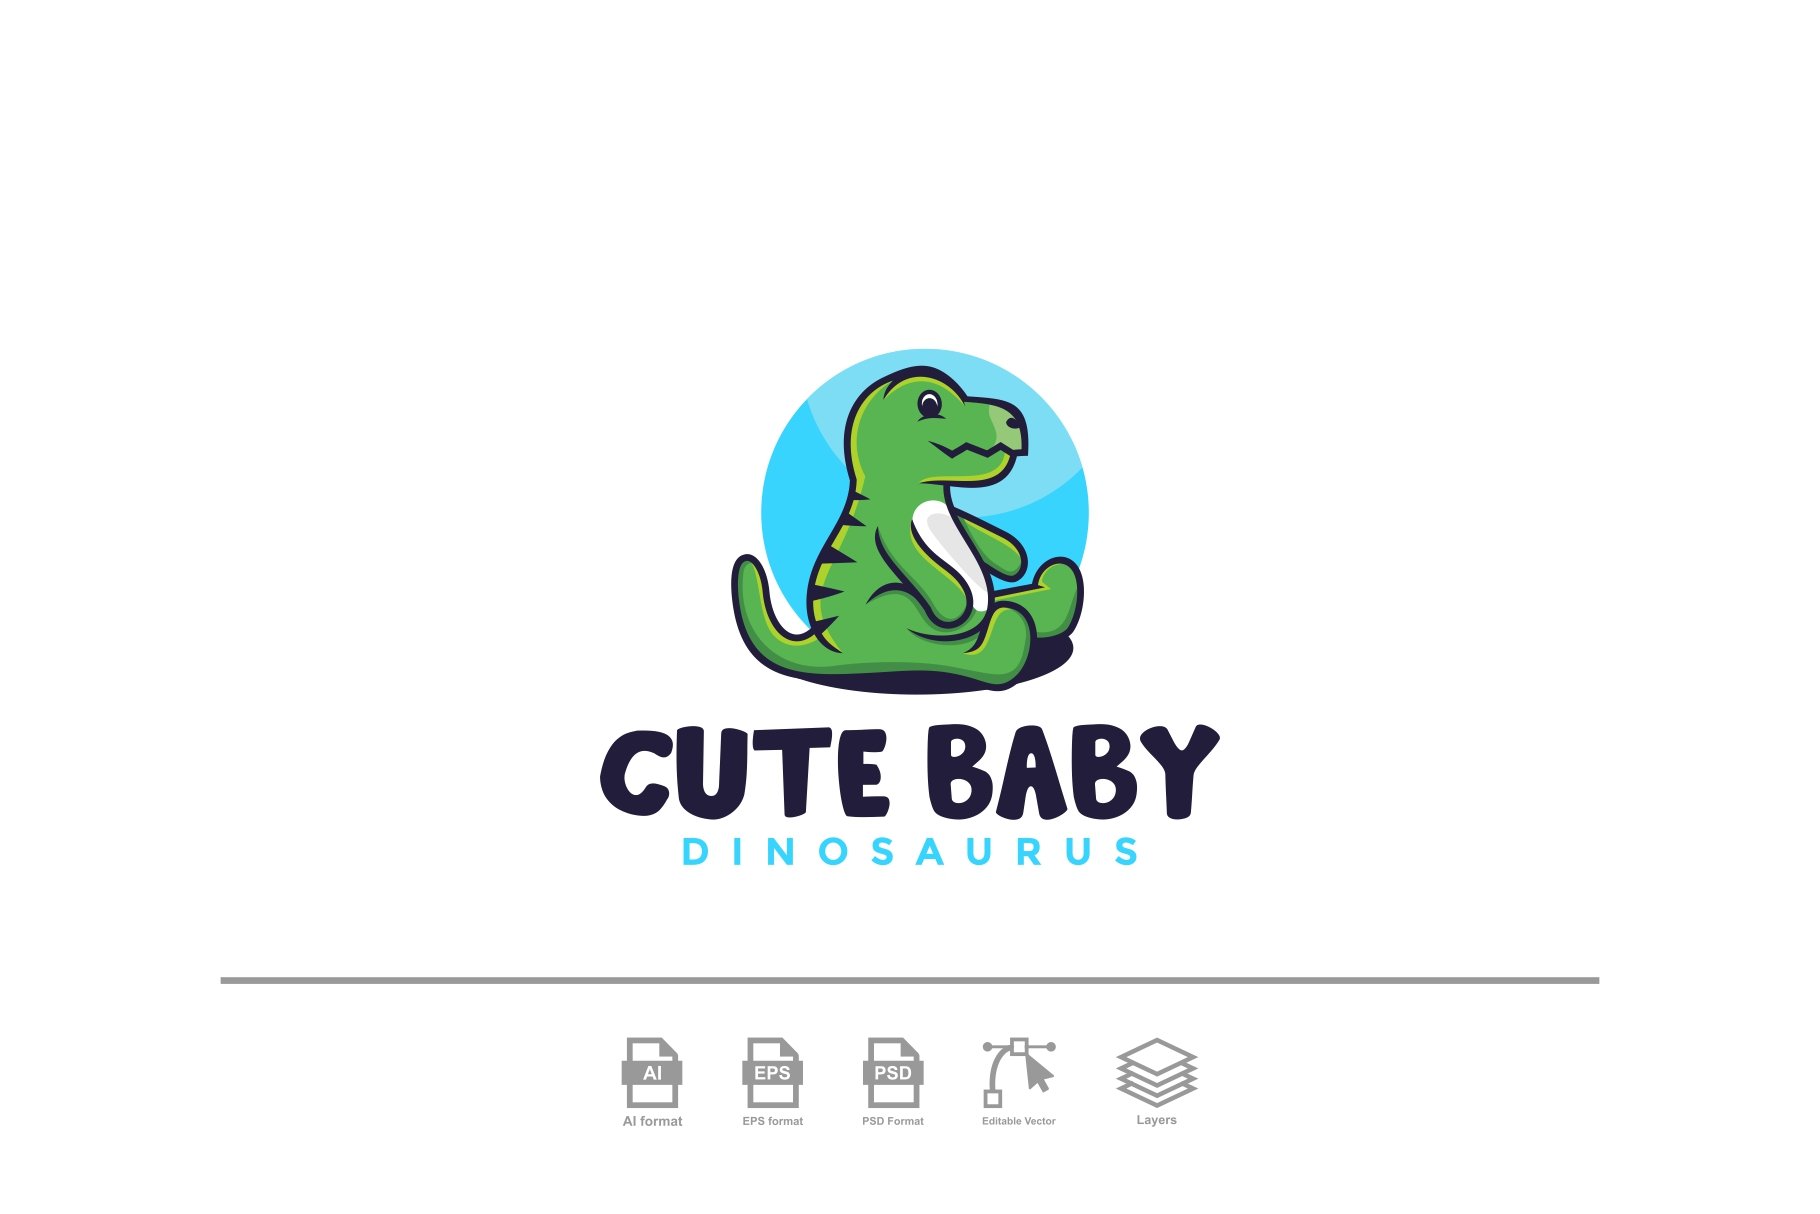 Baby dinosaur logo cover image.